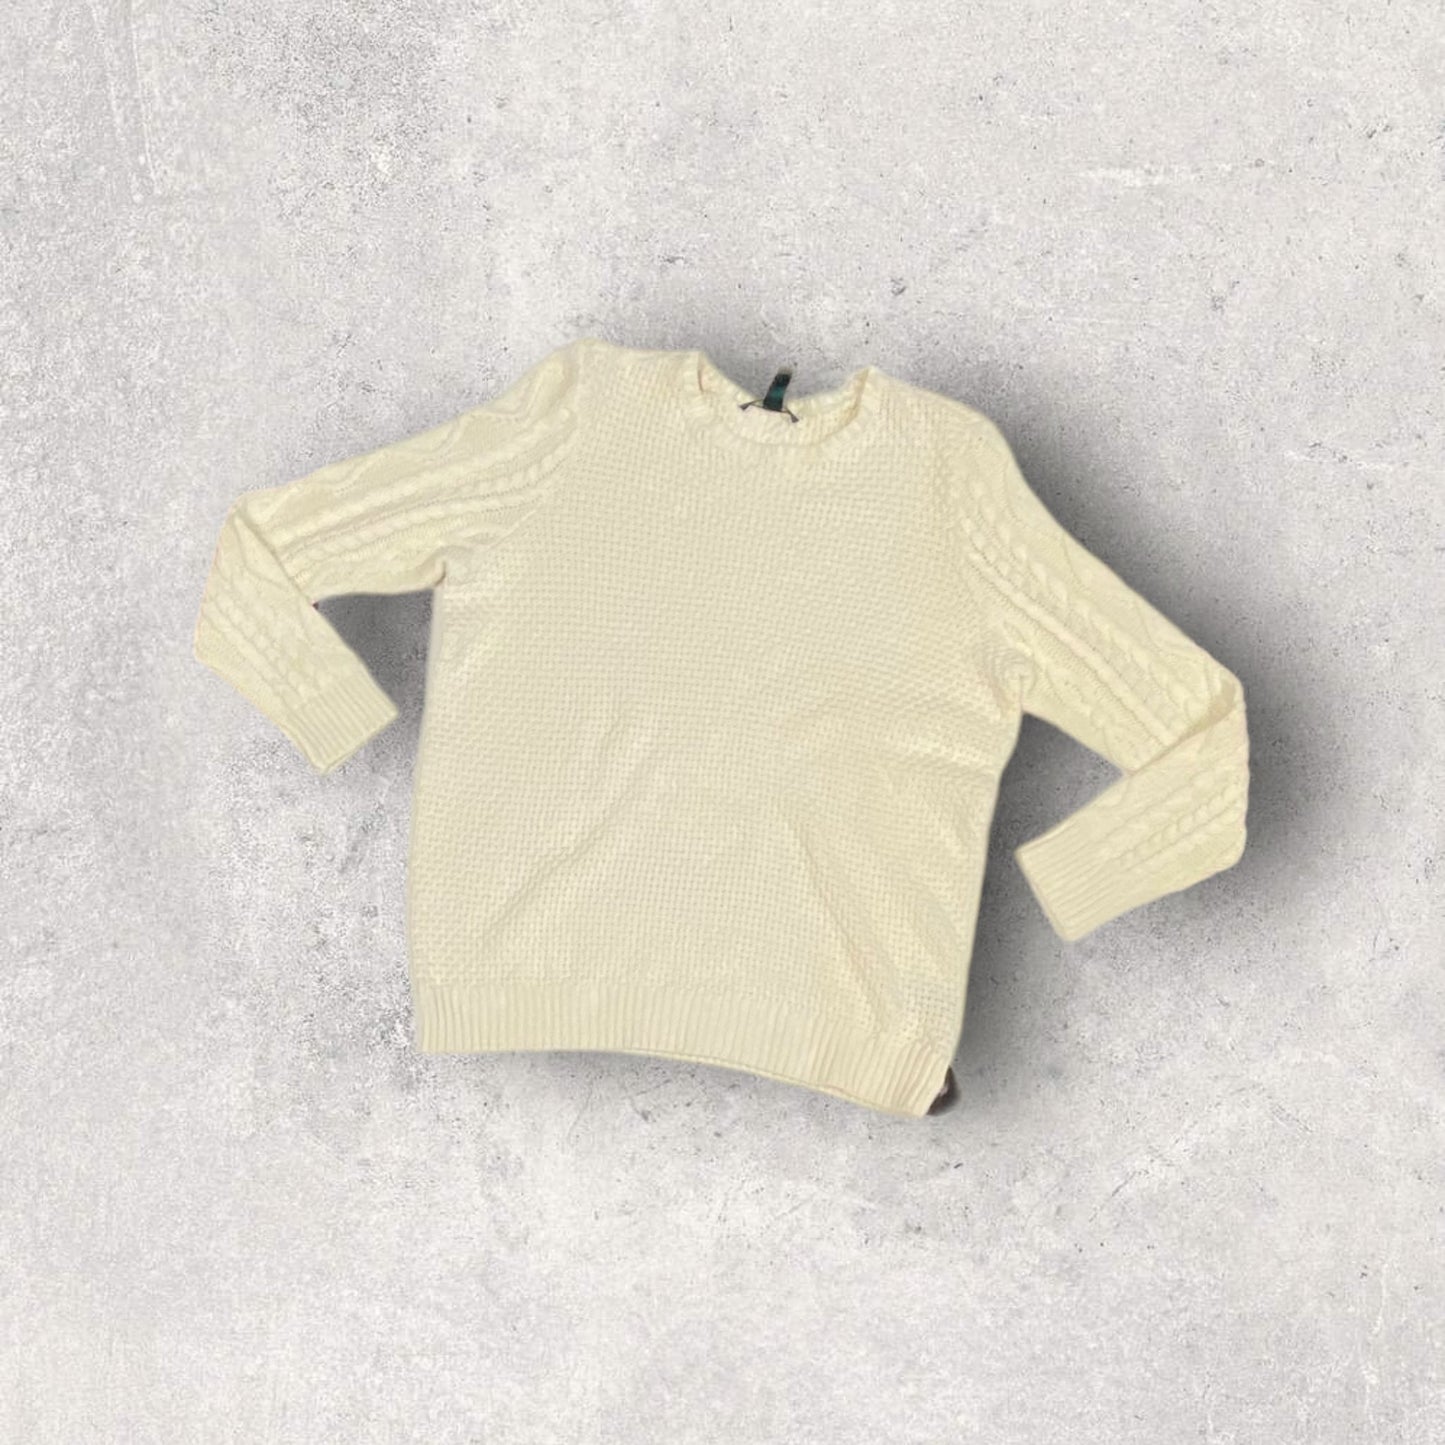 Sweater By Lauren By Ralph Lauren  Size: 1x